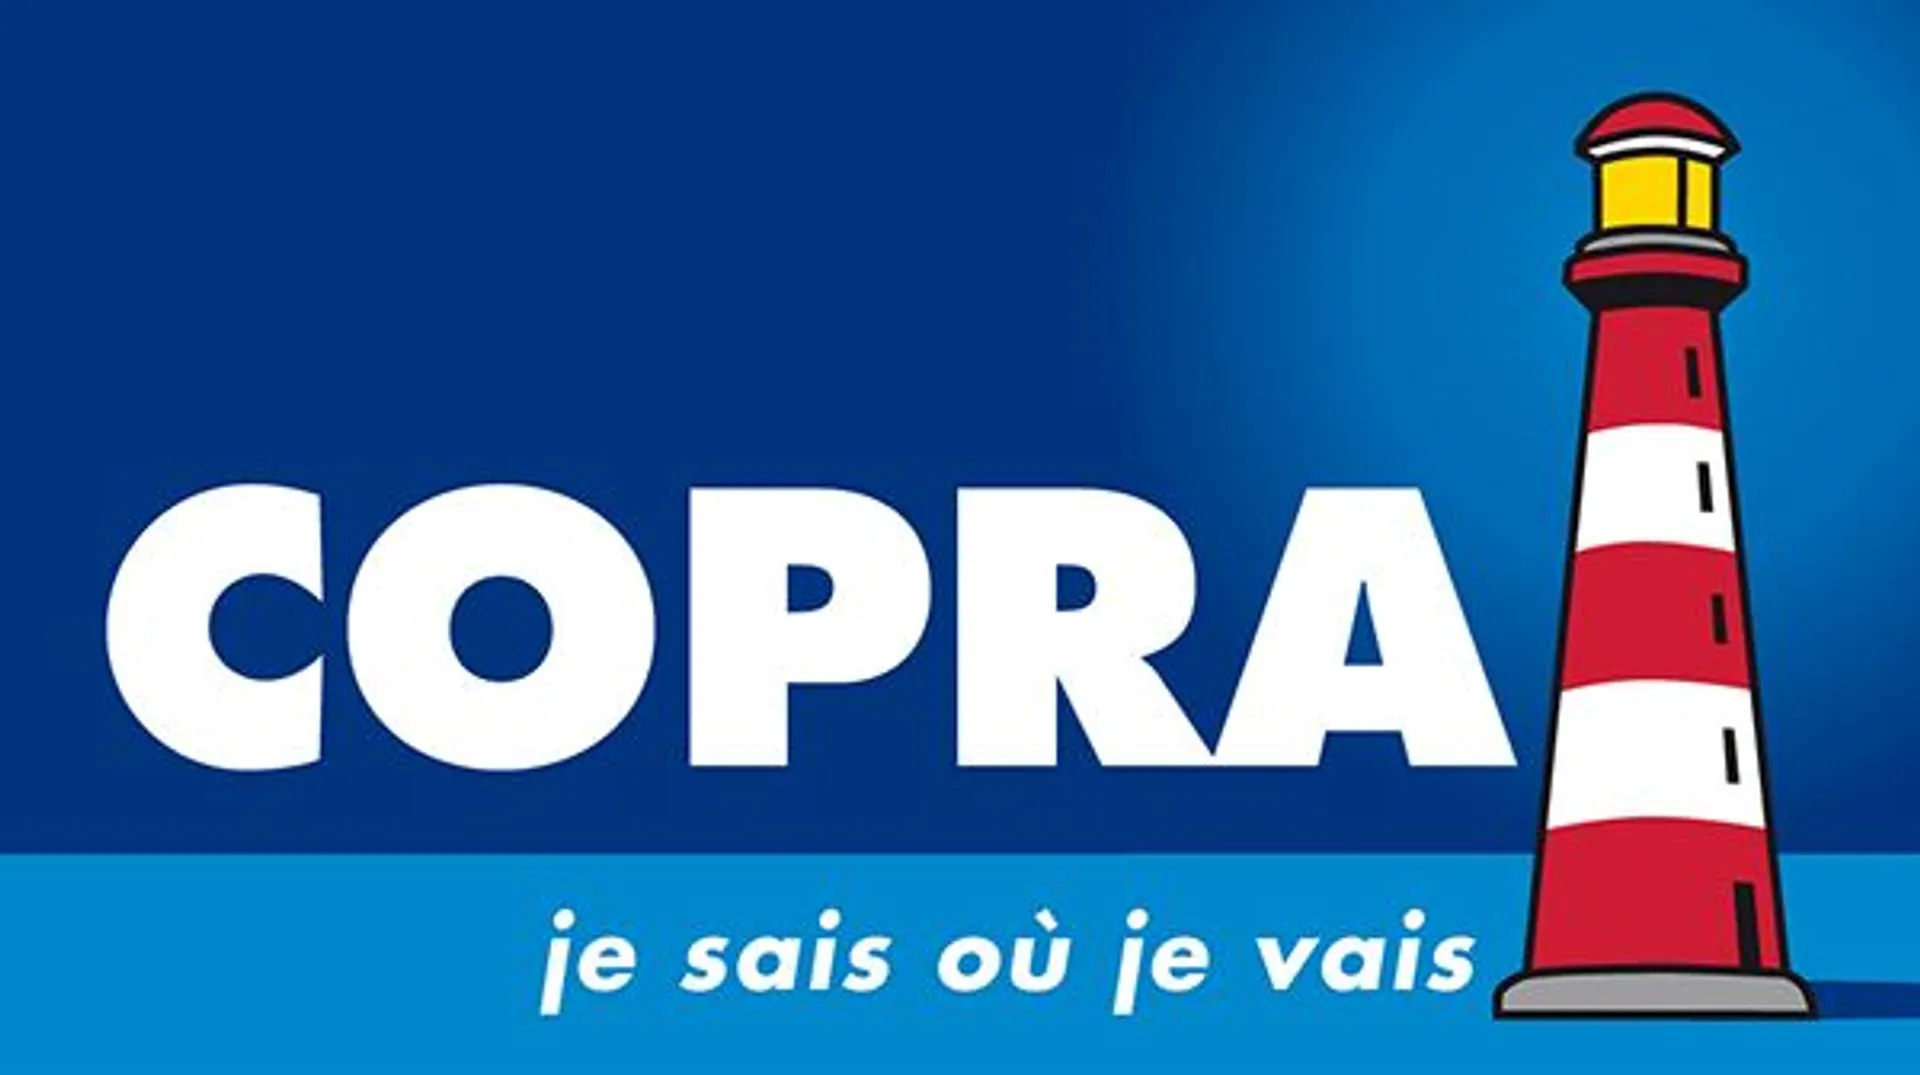 COPRA logo du catalogue